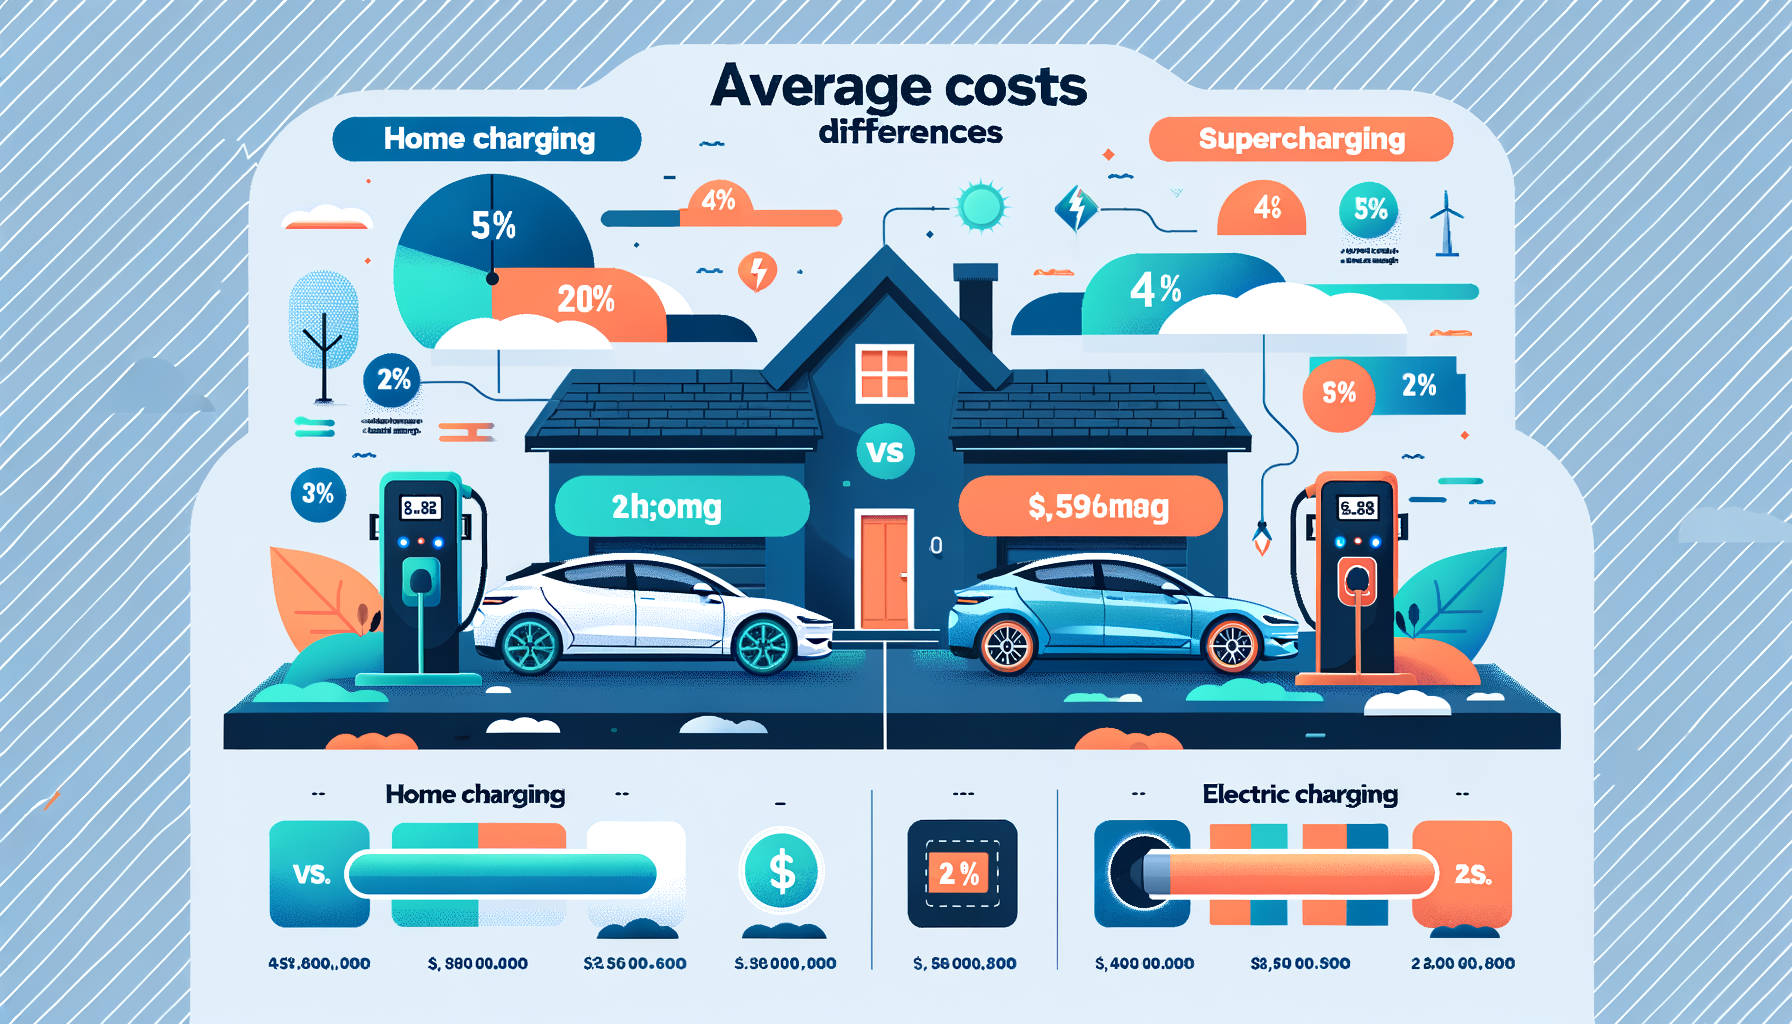 ALT: A cost comparison infographic for Tesla charging methods